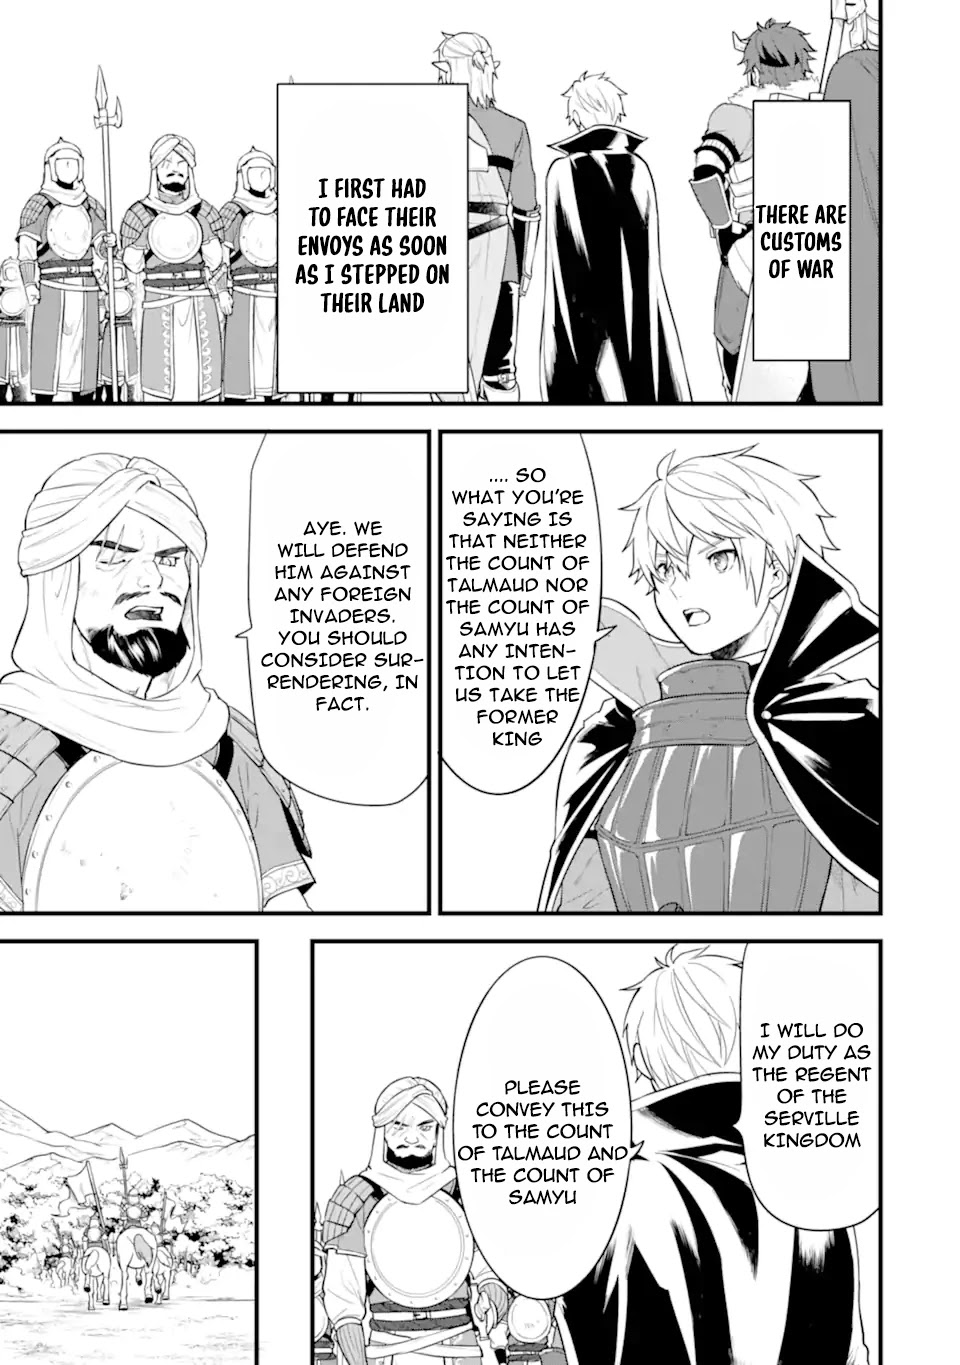 Mysterious Job Called Oda Nobunaga - Page 4